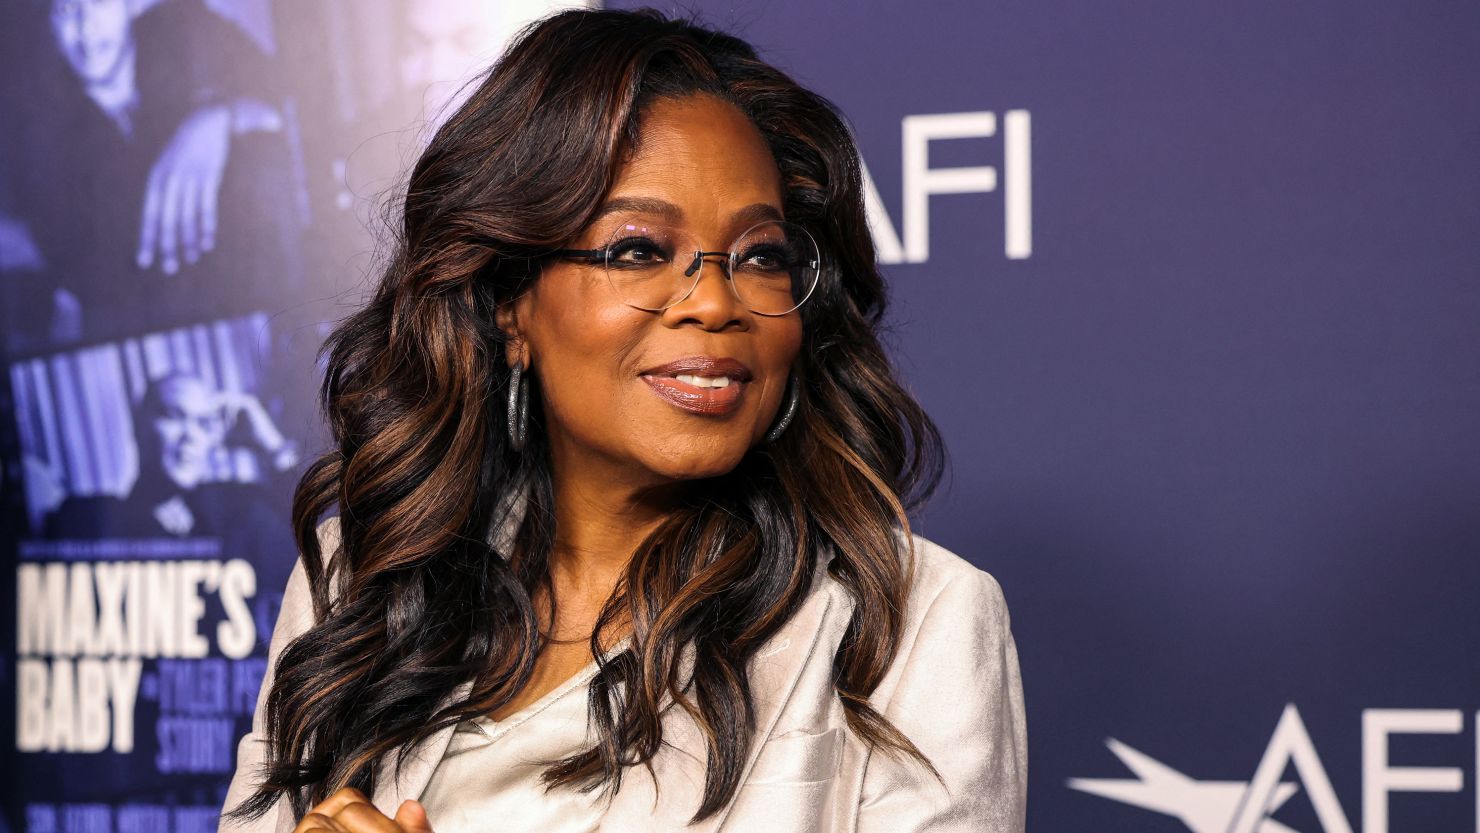 Oprah Winfrey surprises young fan who reenacted 'The Color Purple' scene